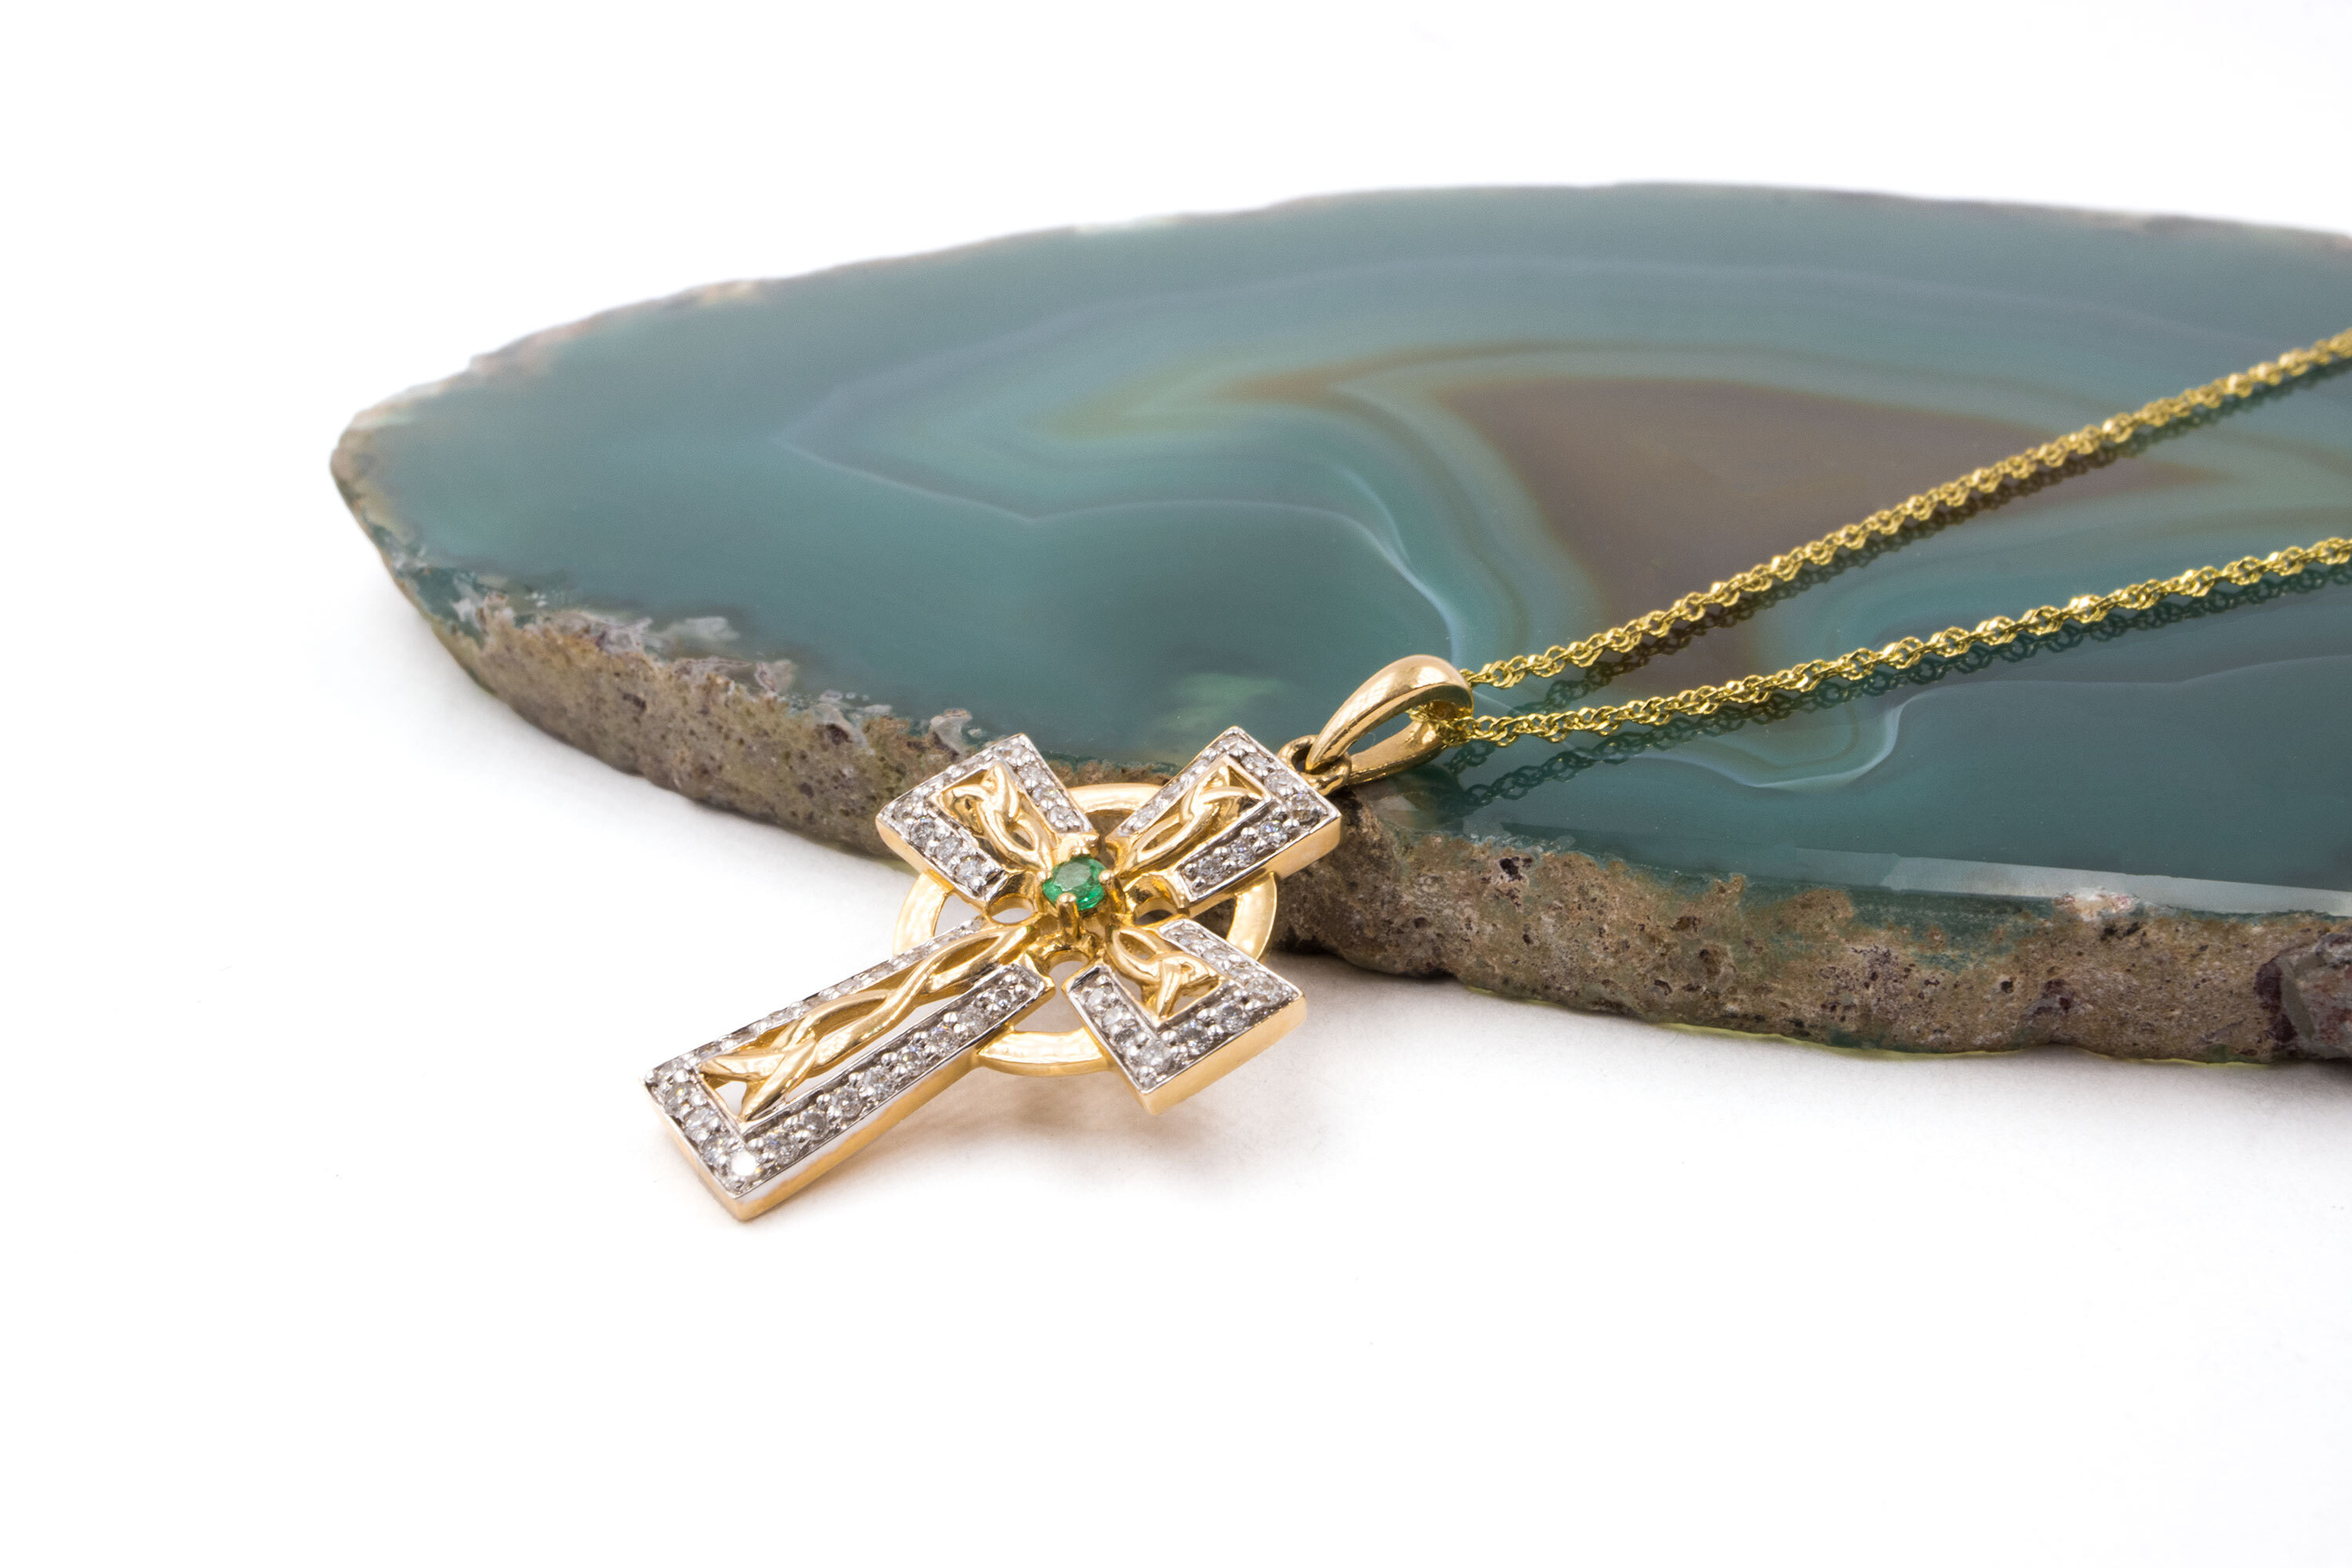 10k White Gold Celtic Cross Diamond Pendant Necklace, 16